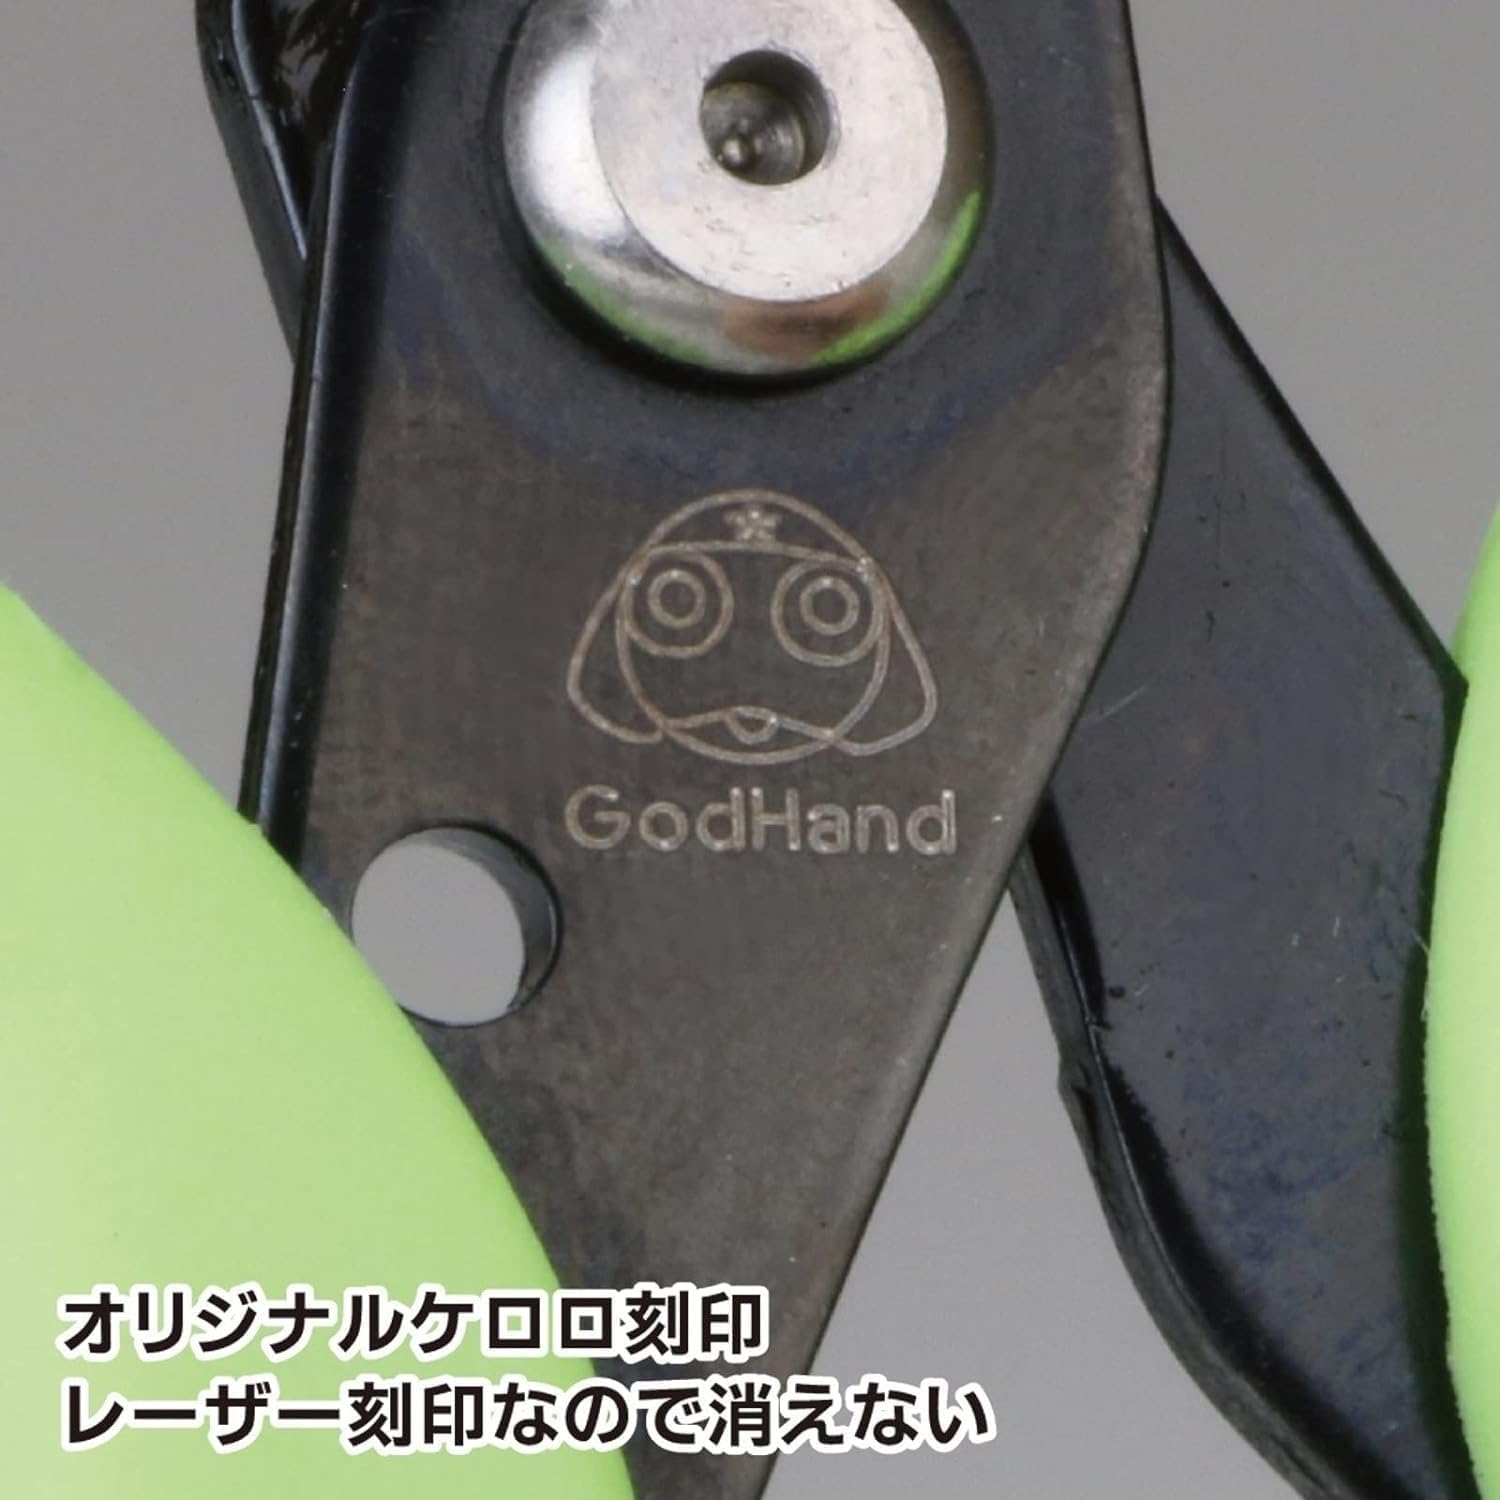 GodHand GH-PN-125-KR Keroro Nipper Hobby Tool - BanzaiHobby